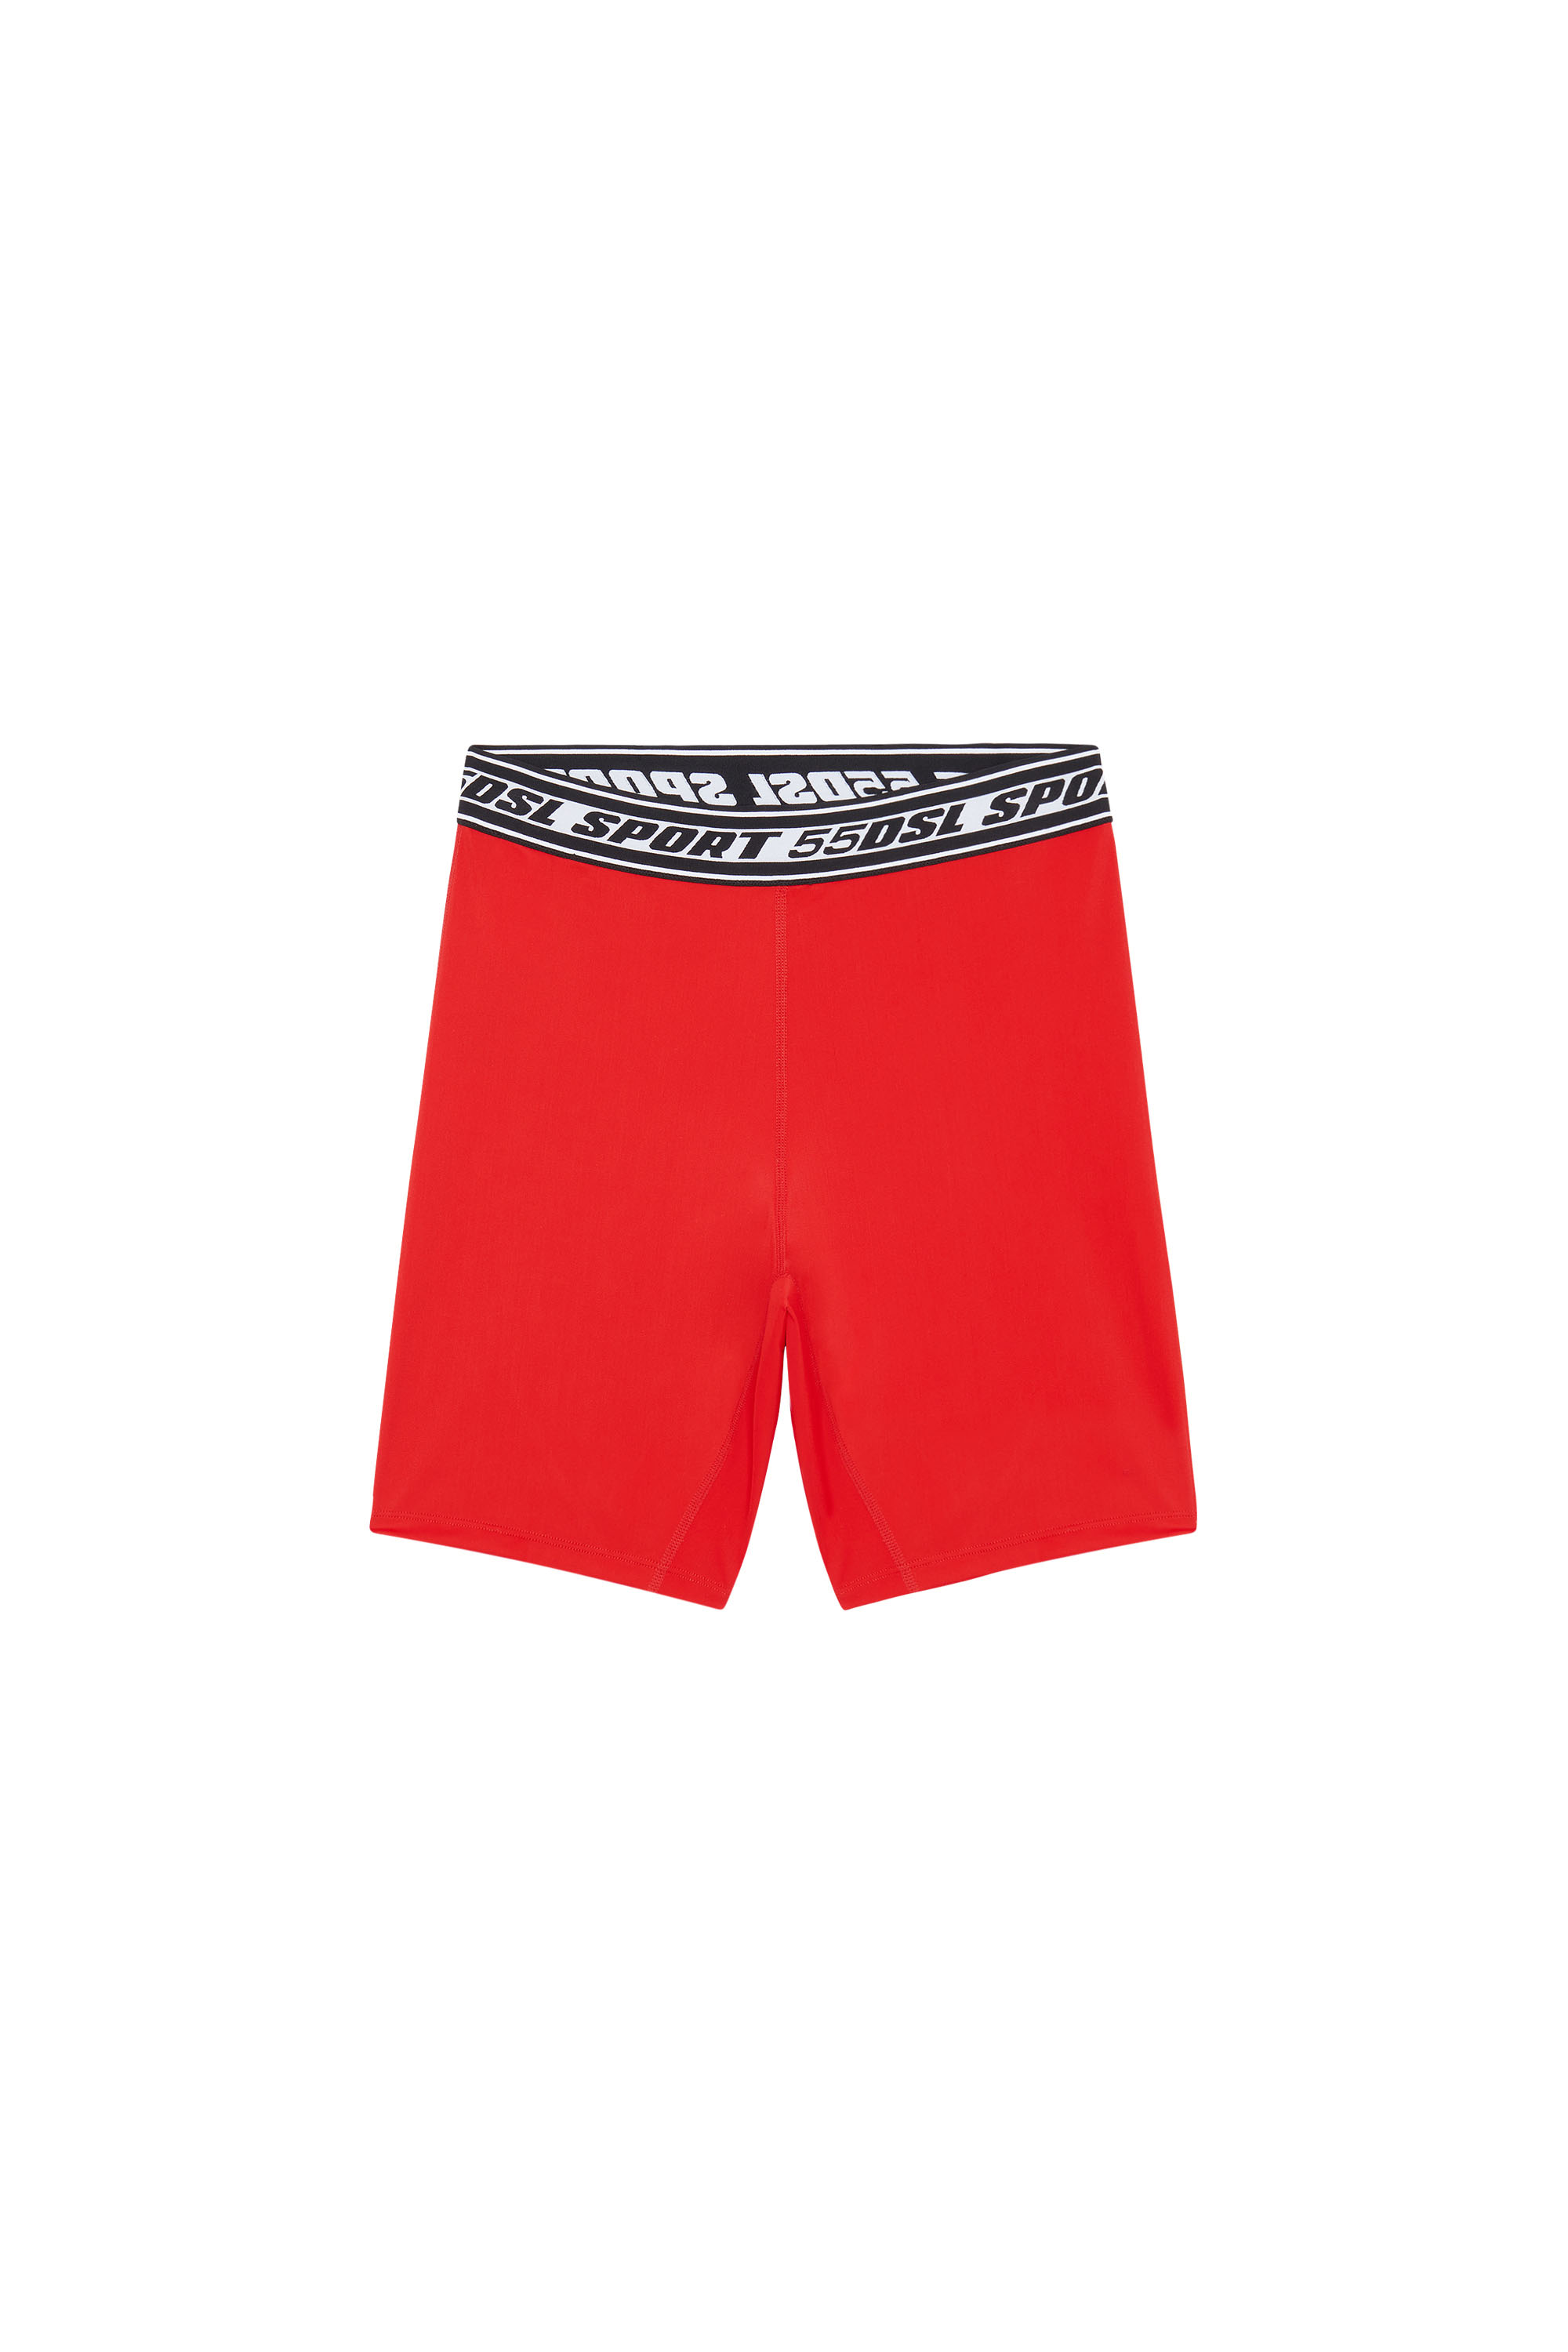 AMSB-SPRANT-WT18, Red - Shorts